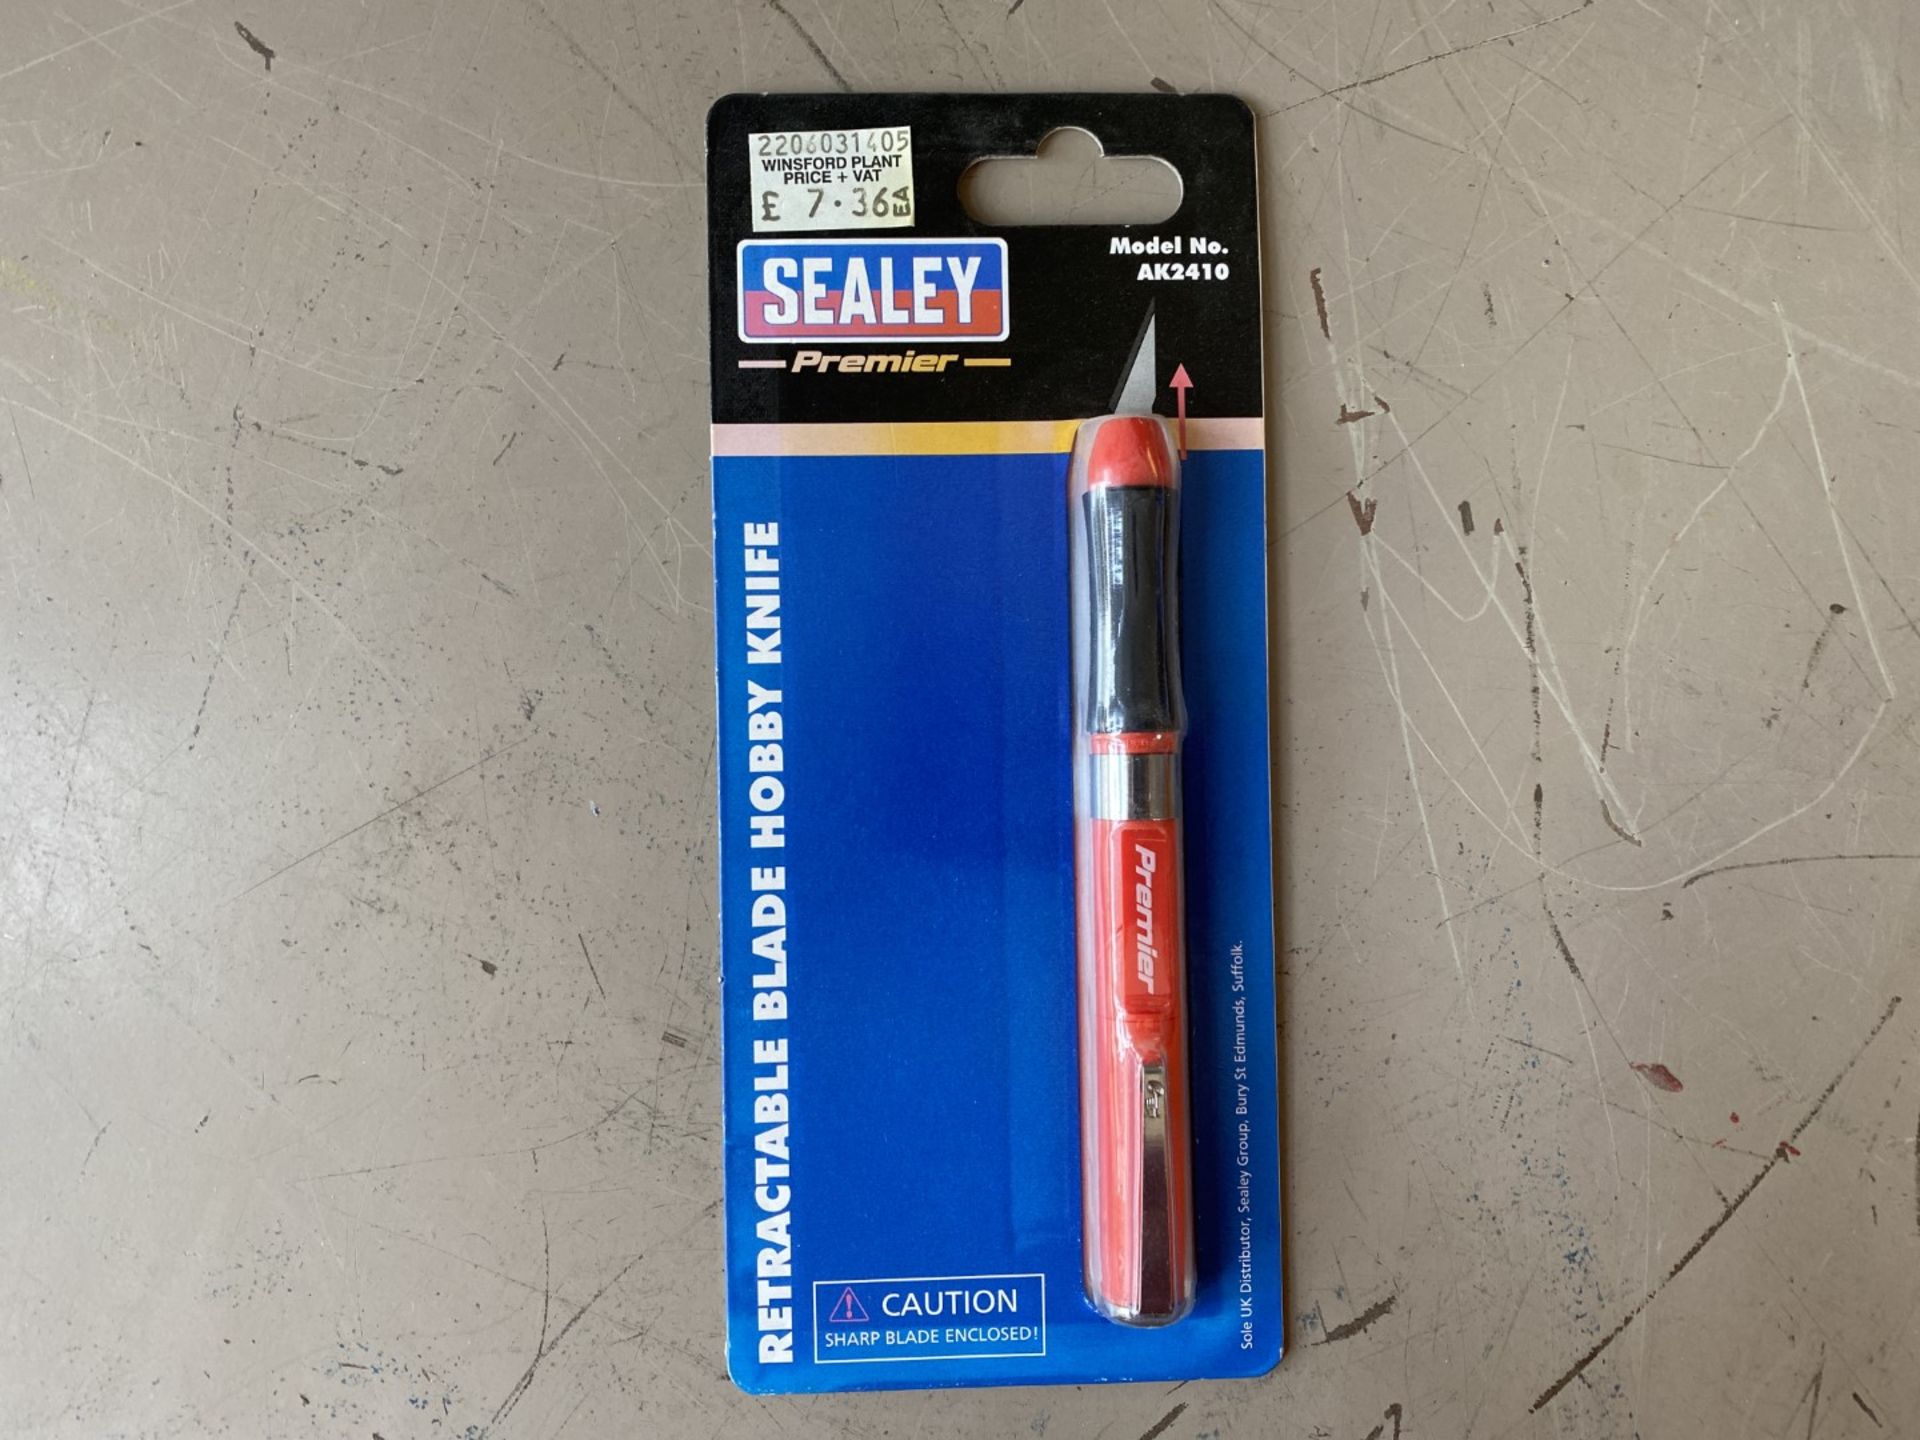 NEW Sealey hobby knife, RRP £7.36